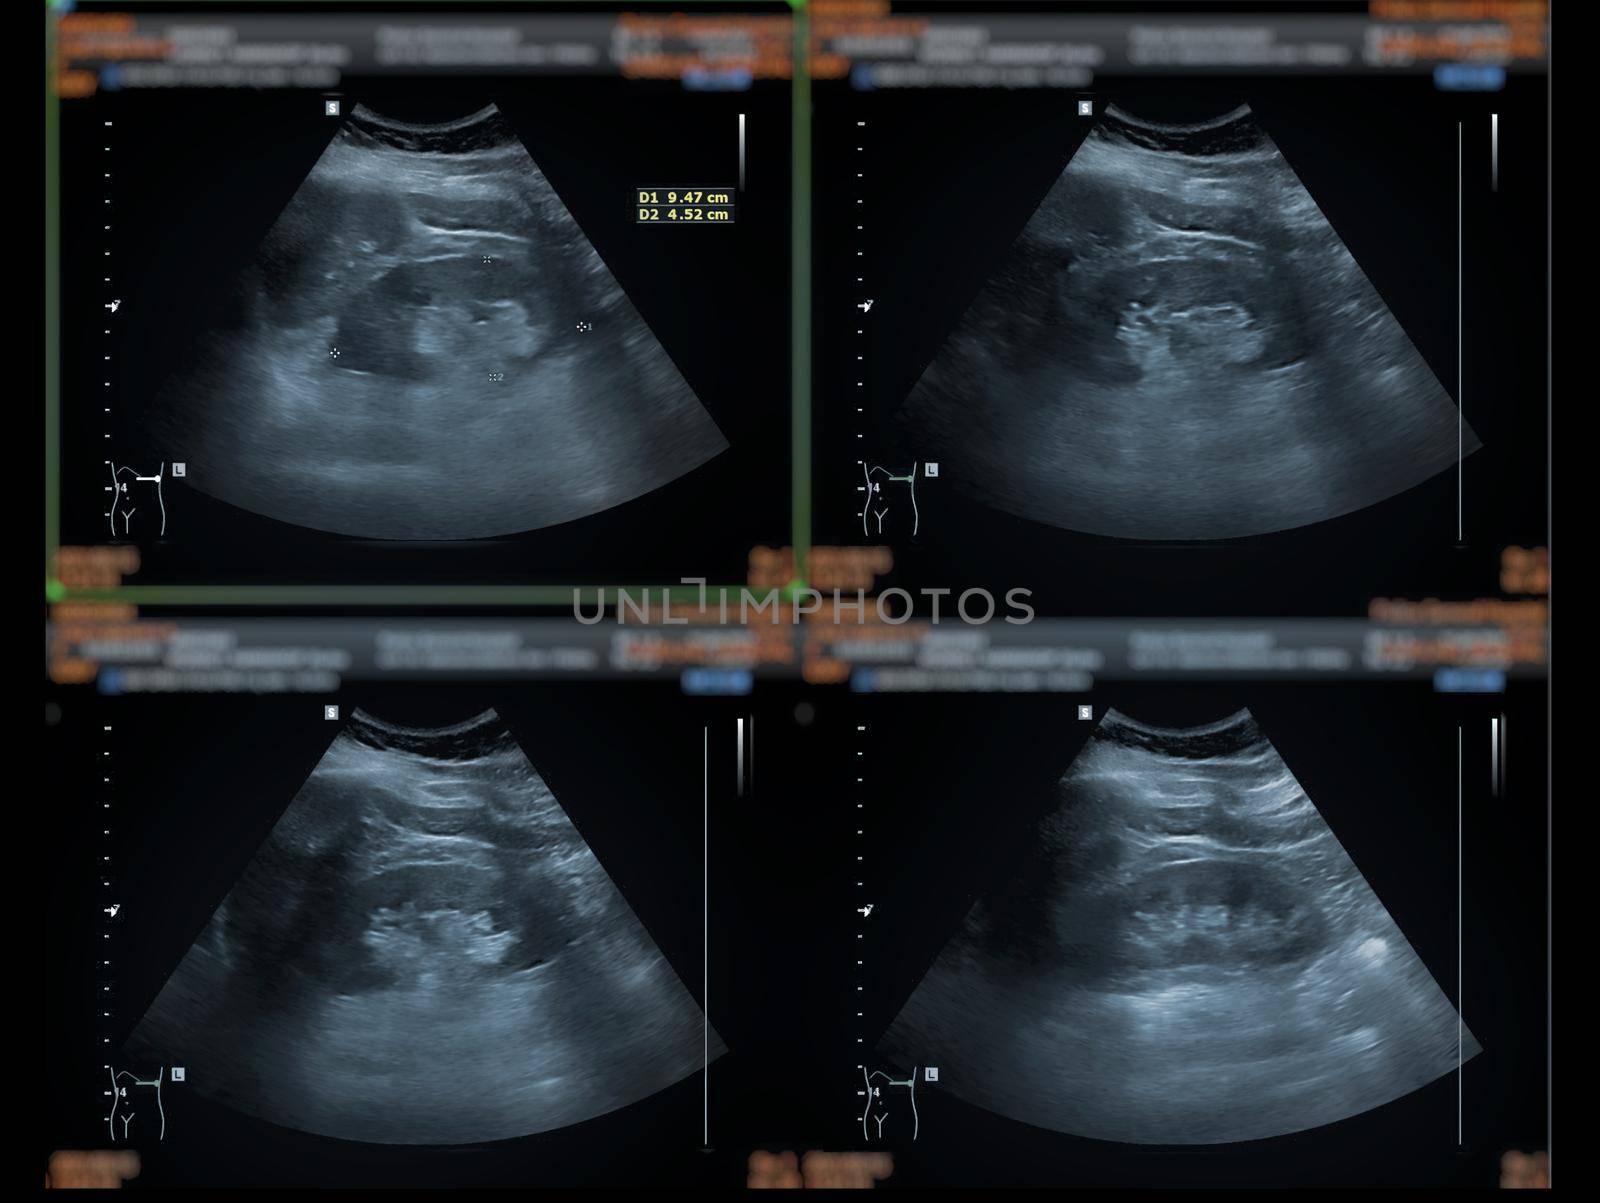 Ultrasound upper abdomen showing Liver, gall bladder and kidney for screening abdominal disease.